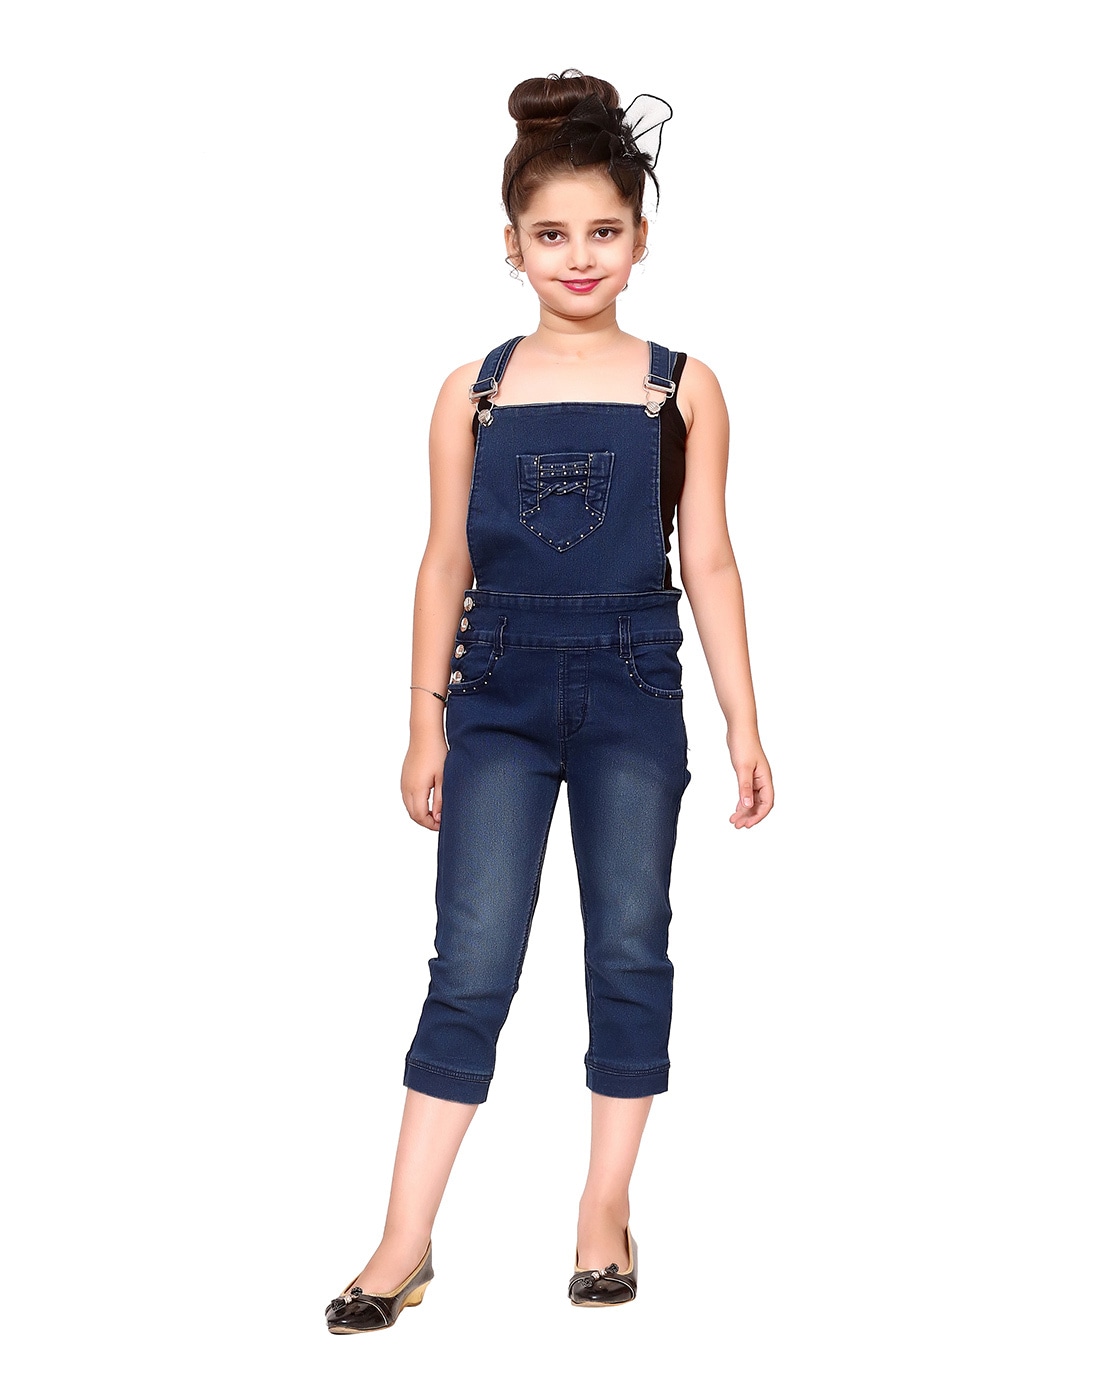 Coogi Baby Girl Shortalls Overalls With Tank Top Dark Denim Size 3T | eBay